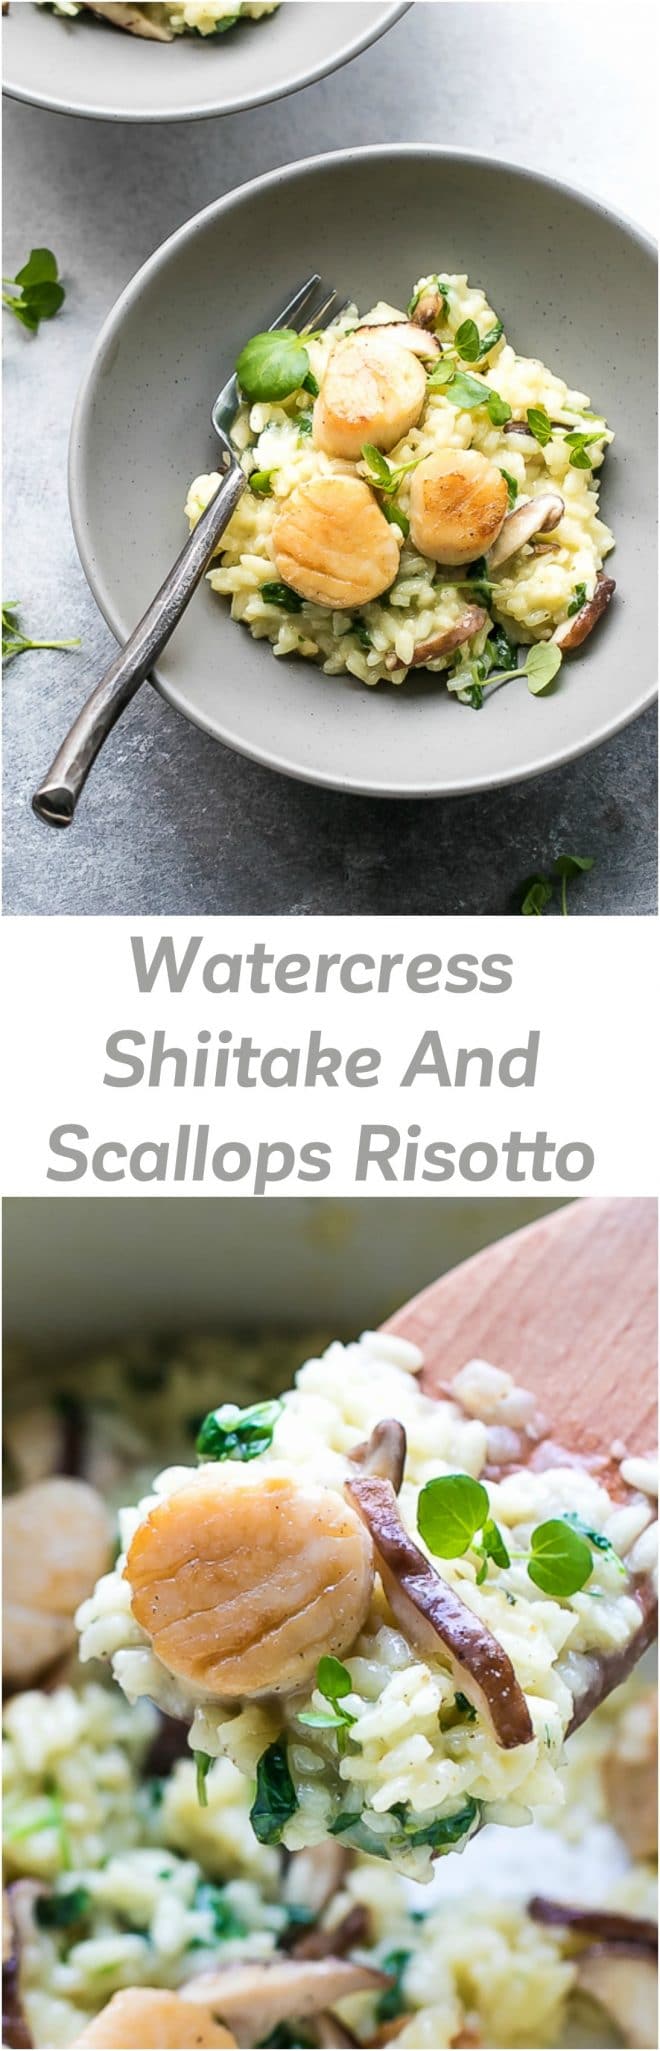 Watercress Shiitake And Scallops Risotto